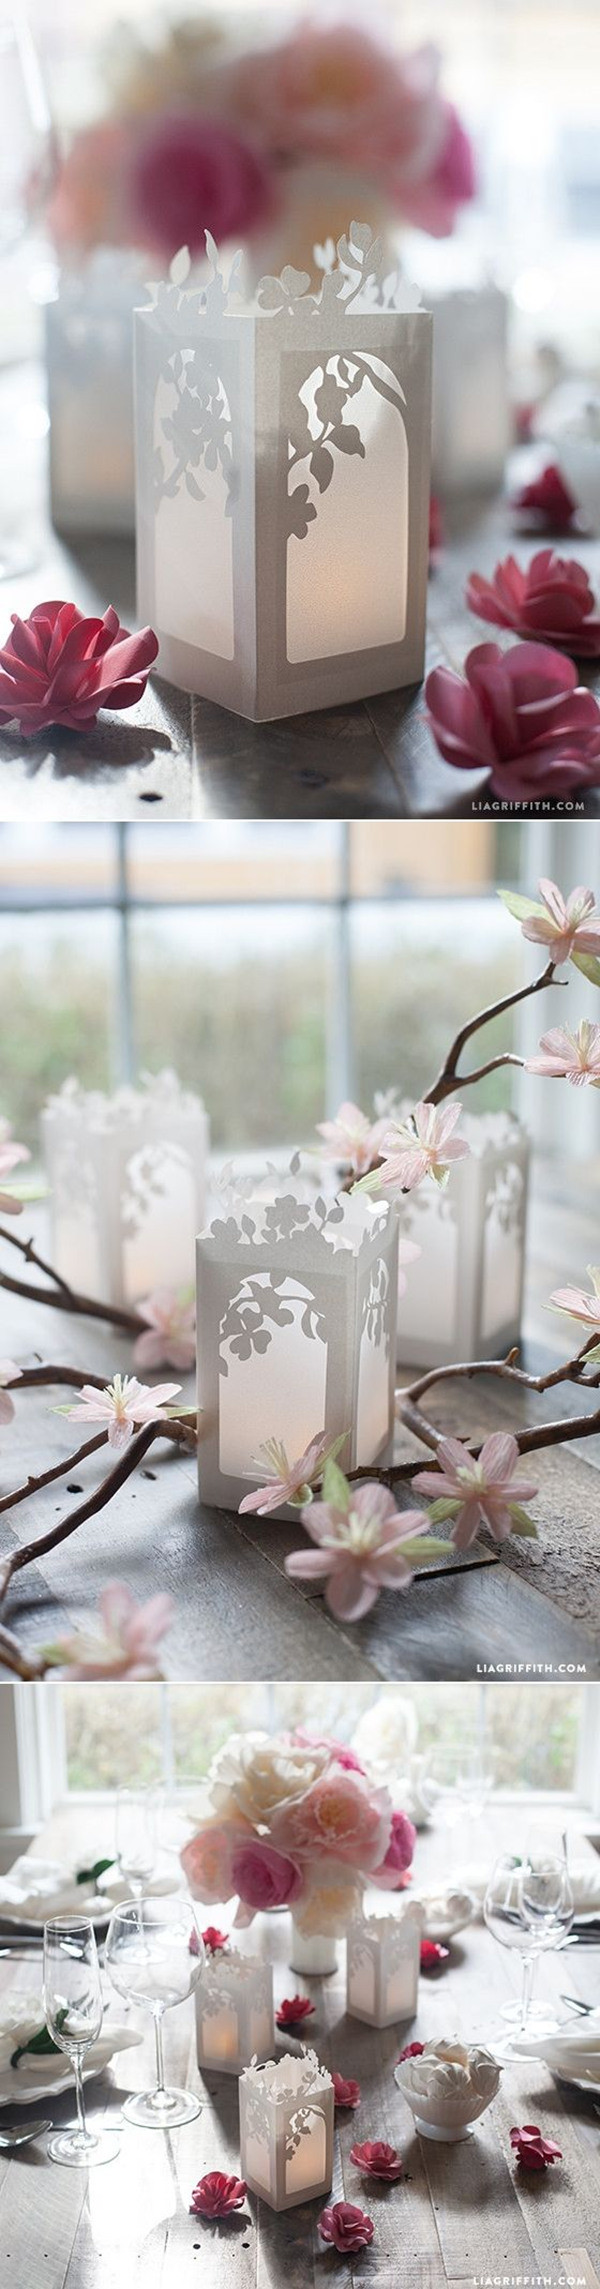 DIY Centerpieces Wedding
 20 Creative DIY Wedding Ideas For 2016 Spring